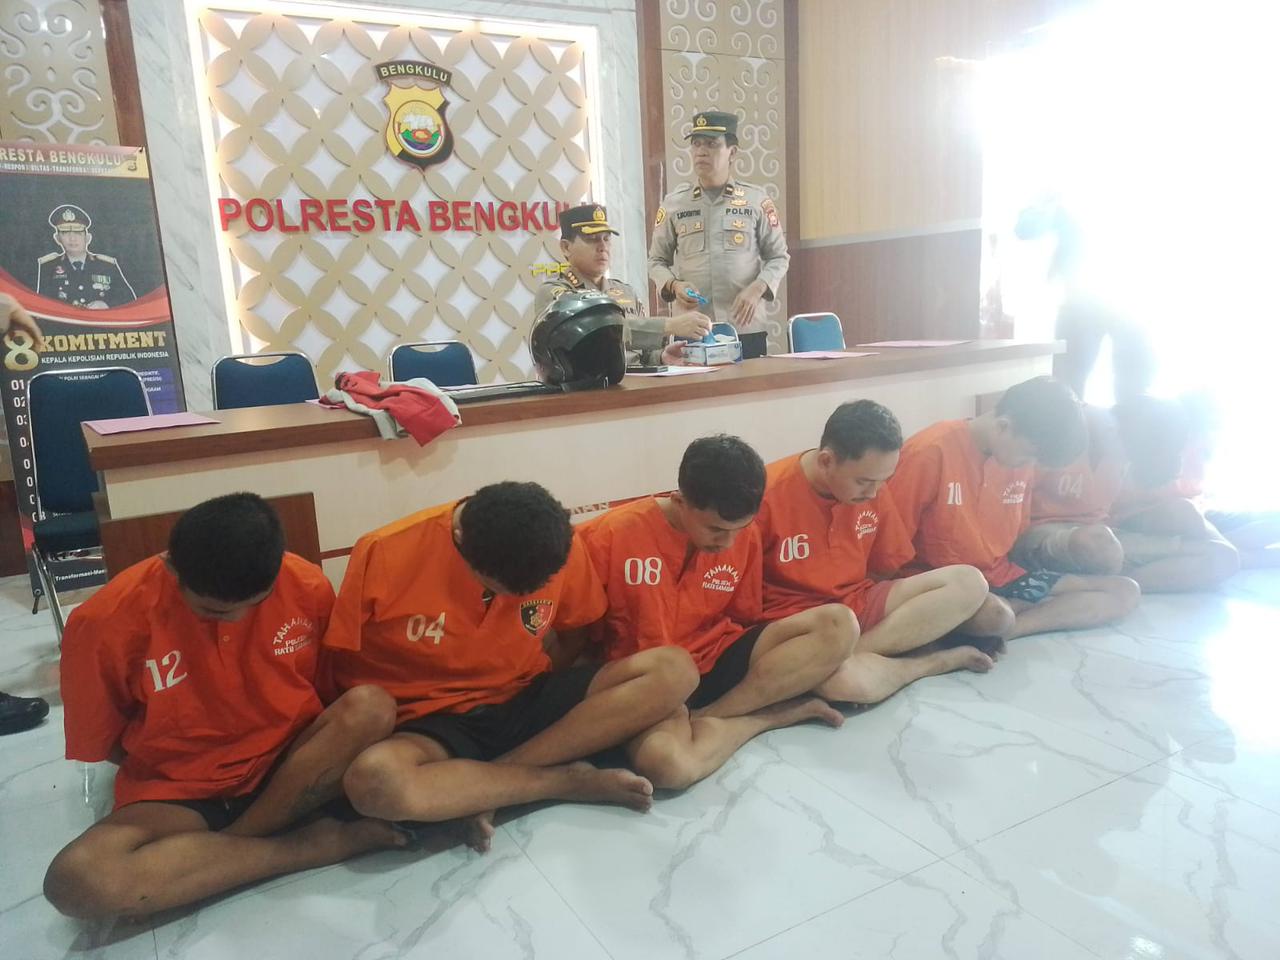 Polresta Bengkulu Tangkap Komplotan Curanmor Bersama 16 Unit Motor, Tsk Mulai dari Pelajar Hingga Security